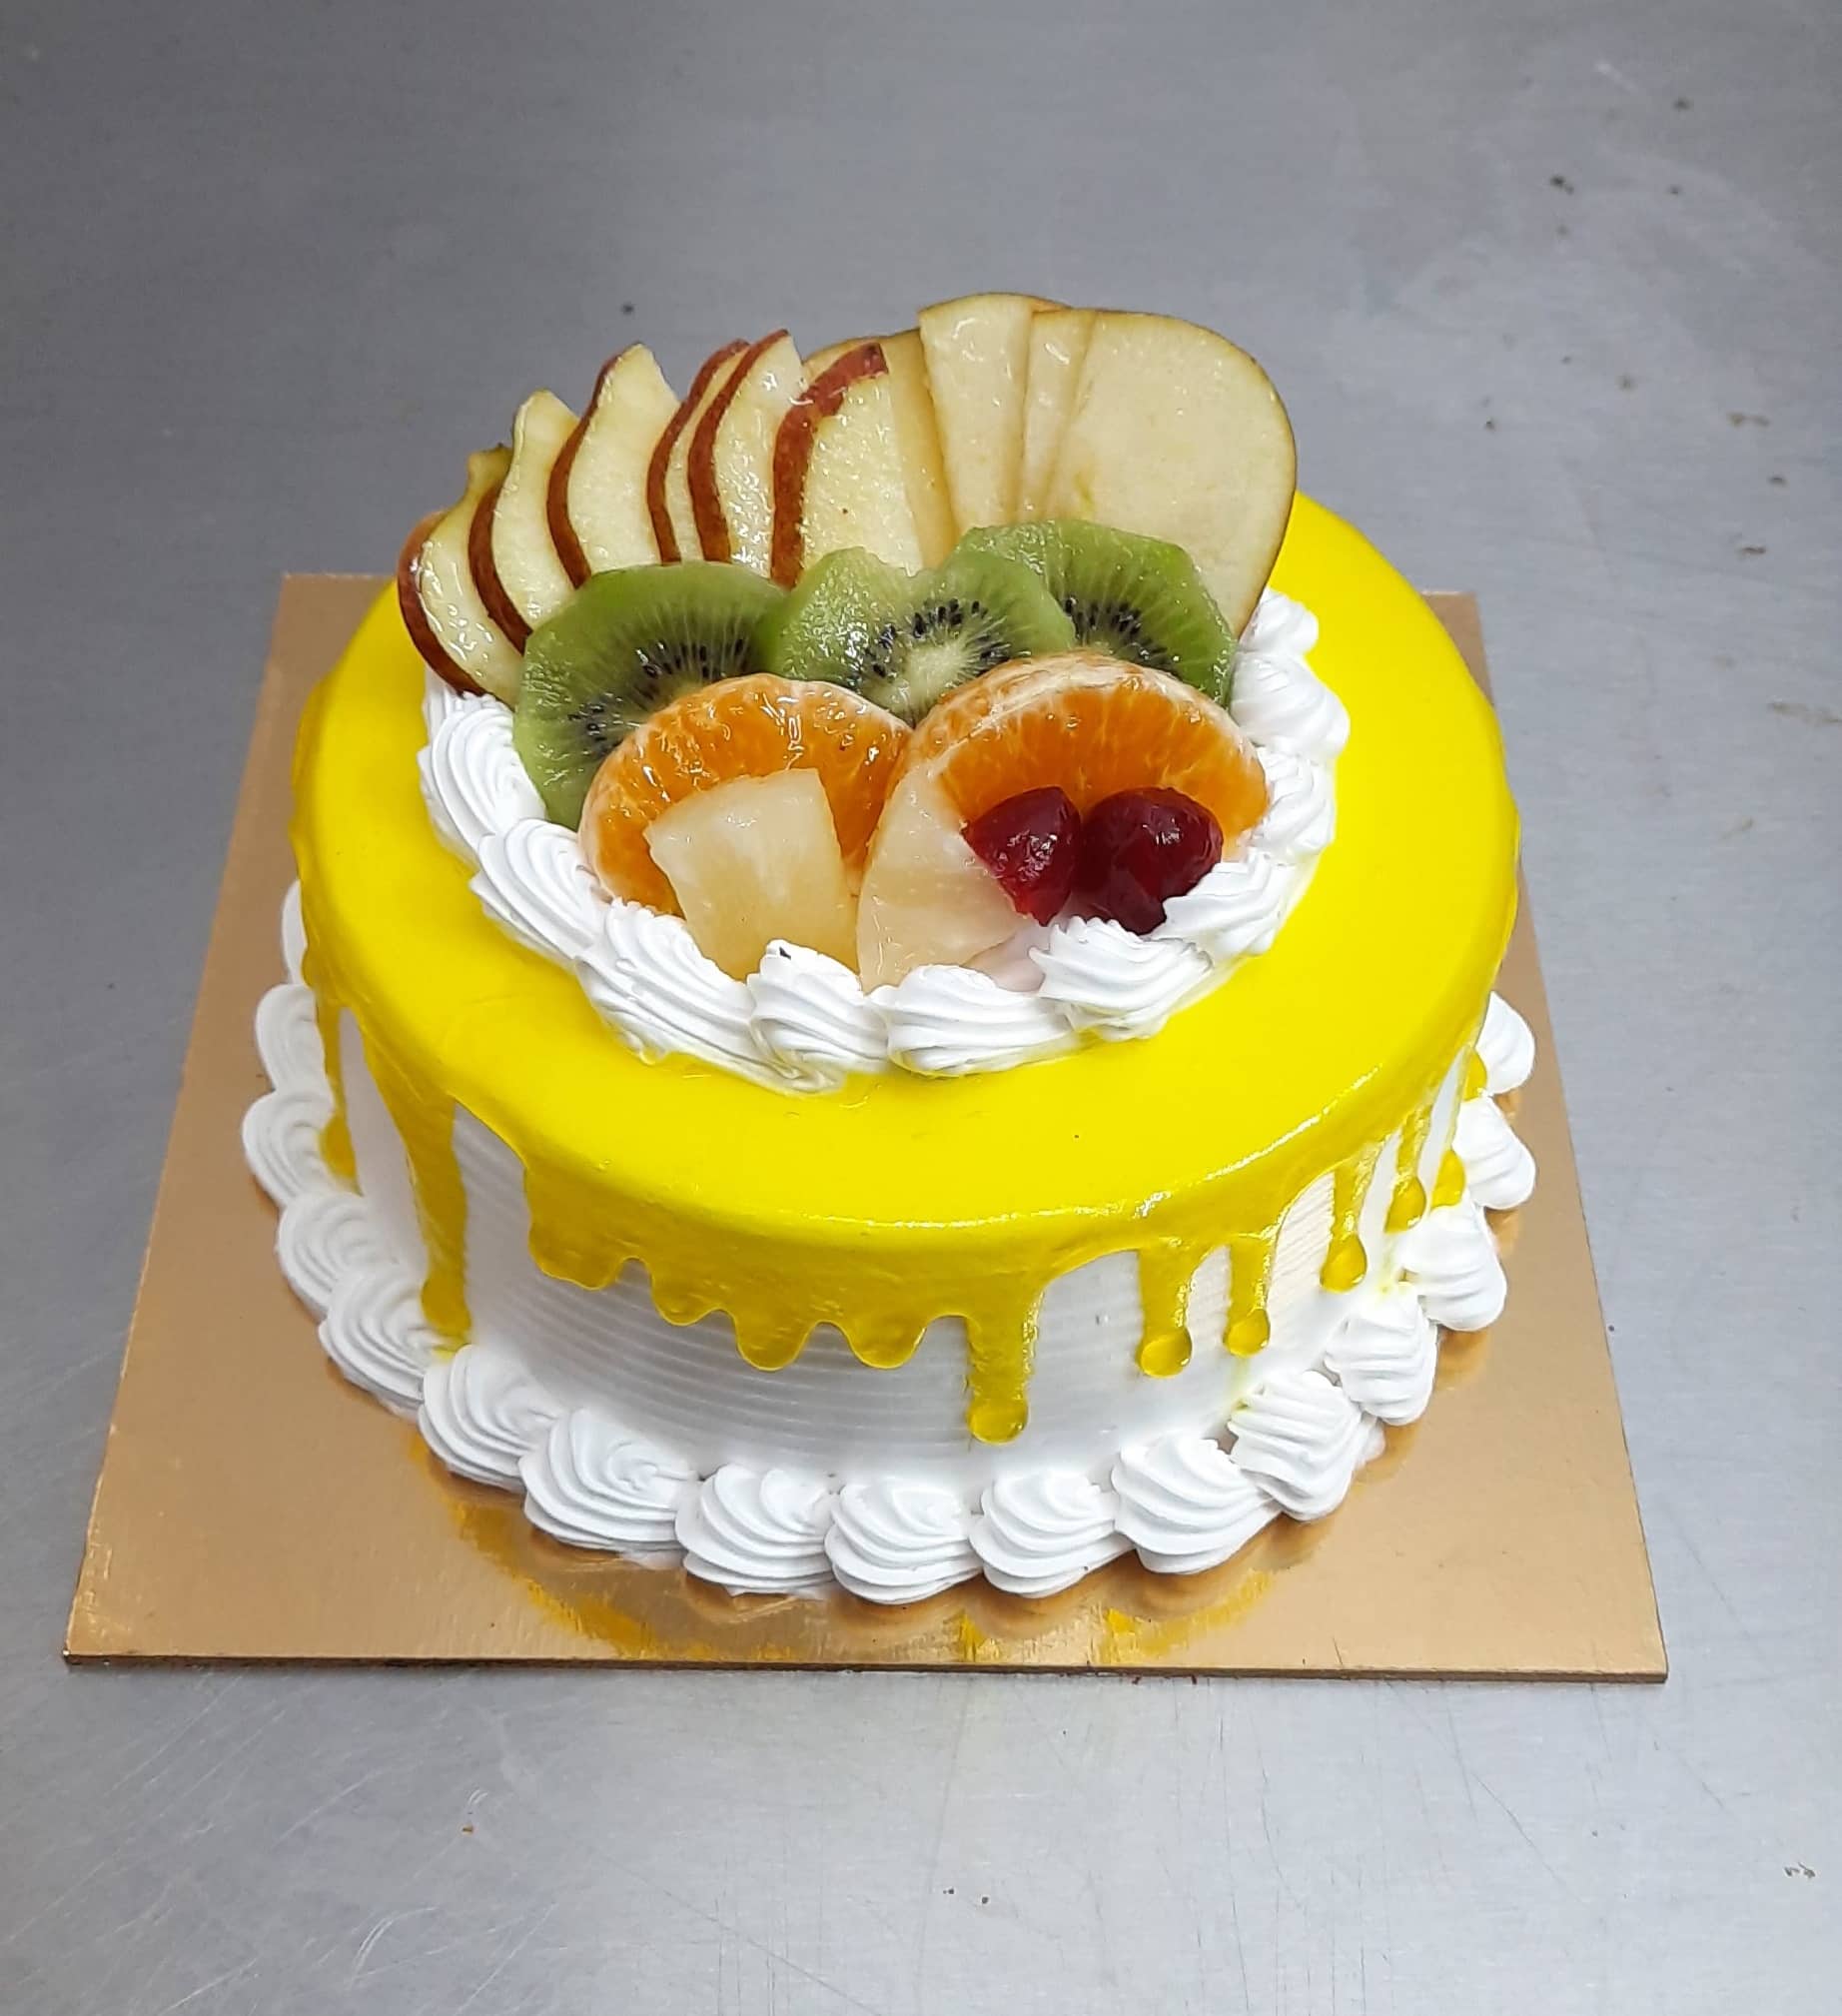 Pineapple cake recipe pineapple fruit cake design simple cake | Pineapple  cake recipe pineapple fruit cake design simple cake | By Fancy Cake Videos  | Facebook